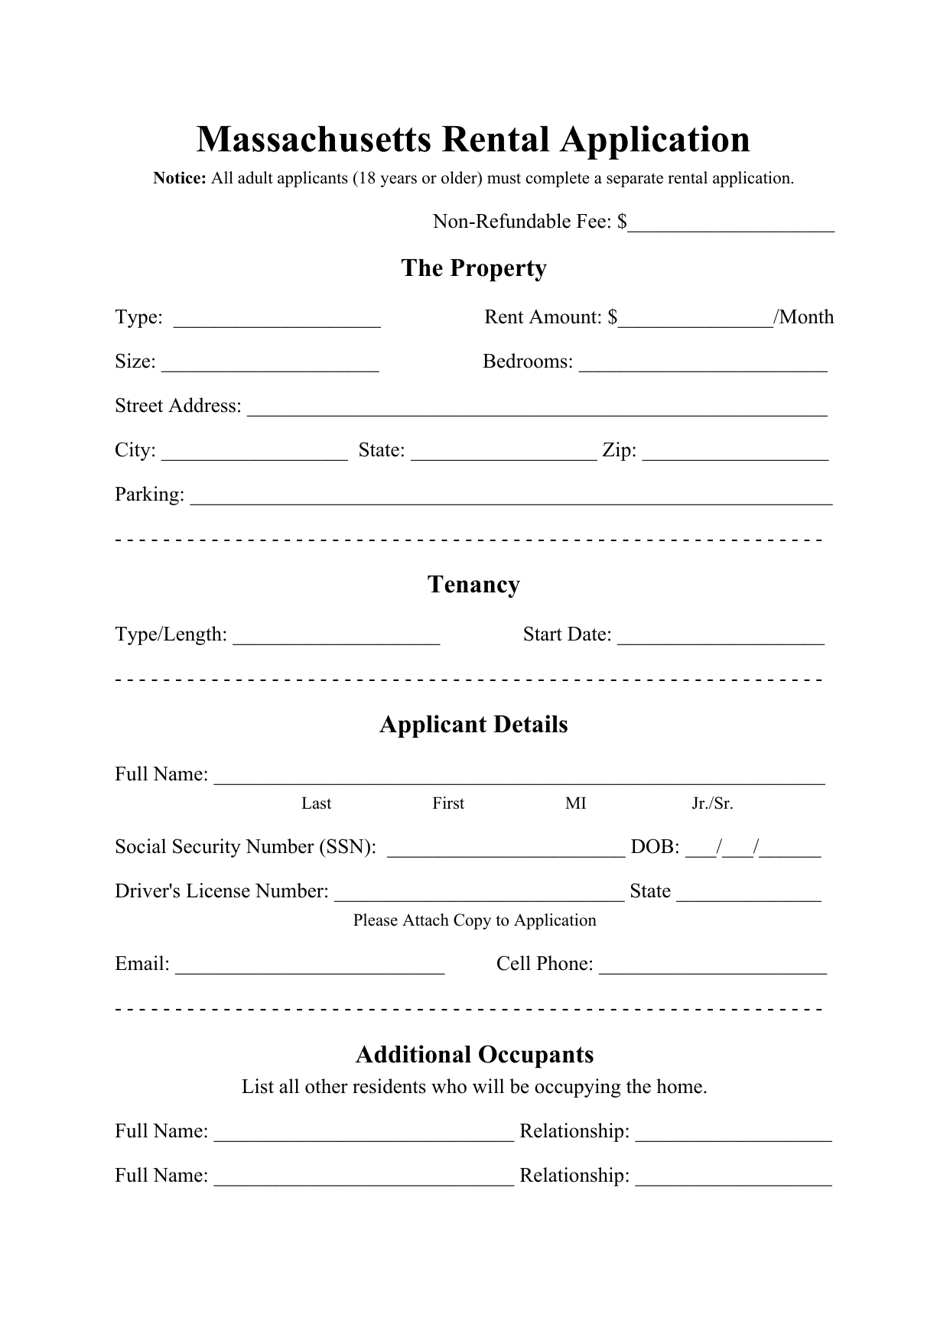 Massachusetts Rental Application Form Download Printable Pdf Templateroller